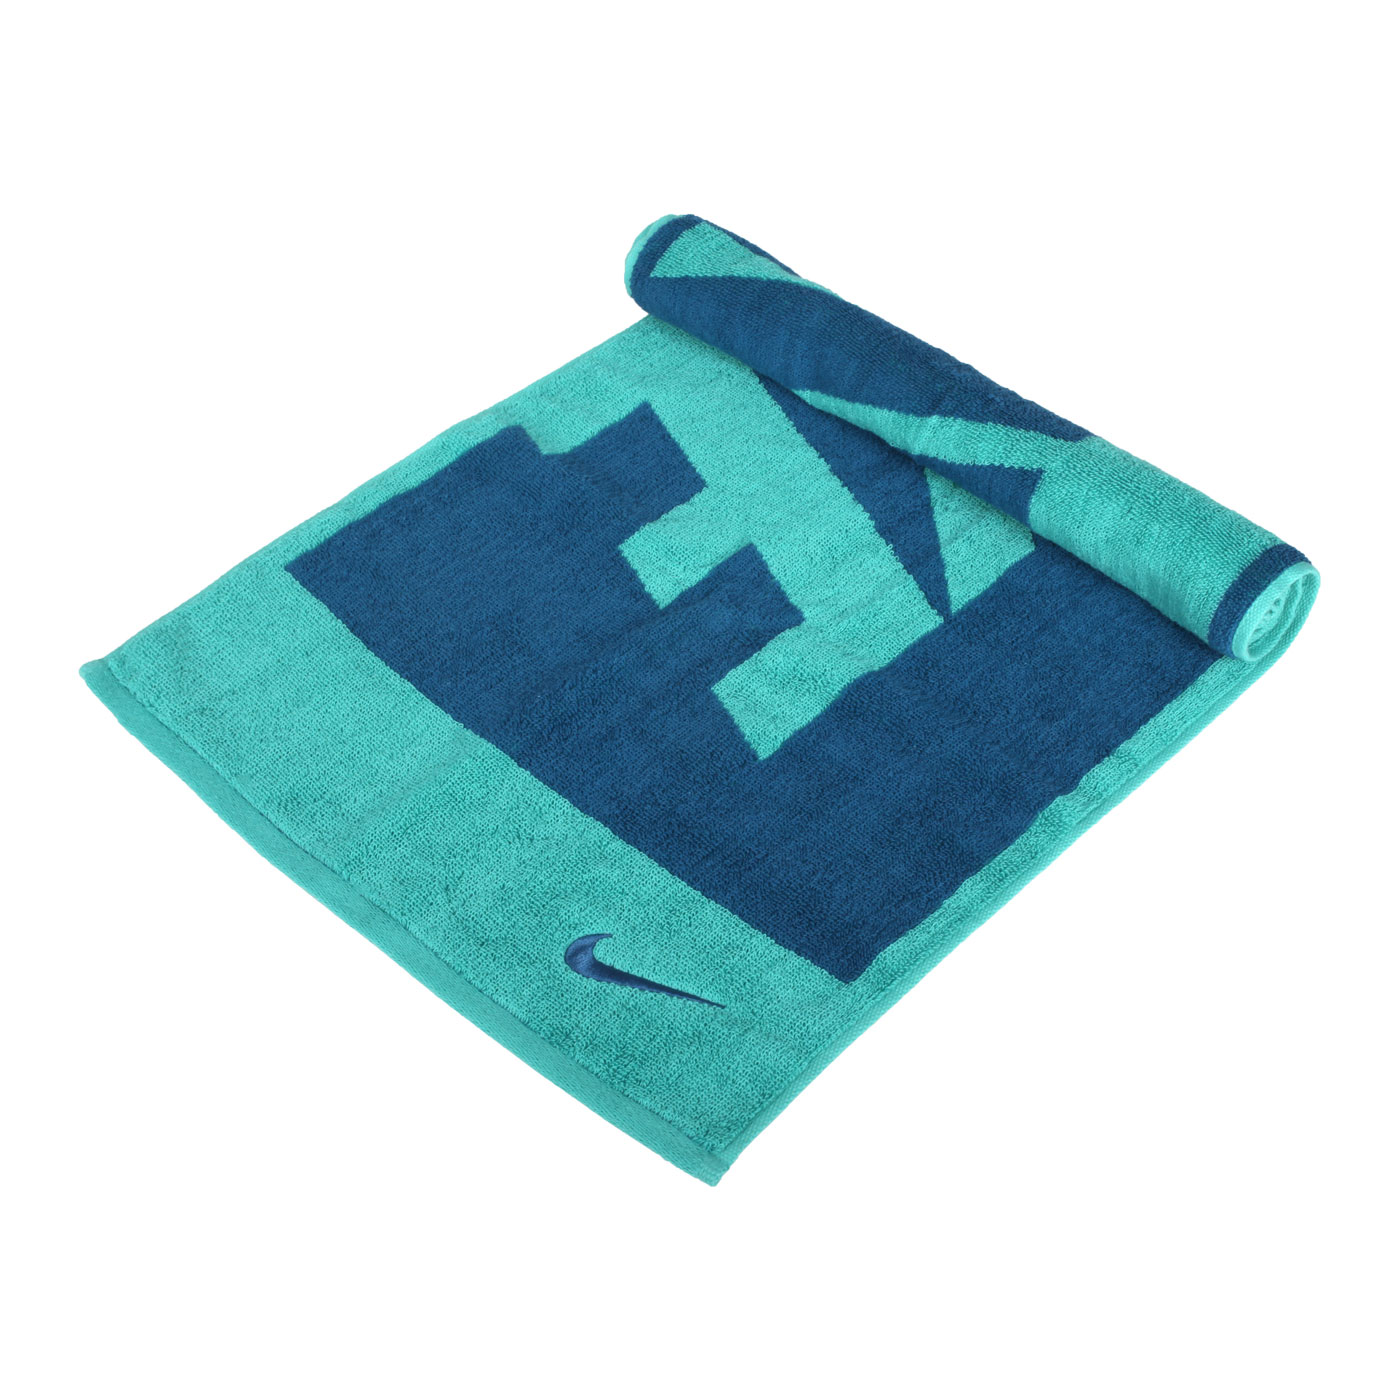 NIKE JACQUARD毛巾(80*35cm) N1001539304MD - 湖水綠丈青